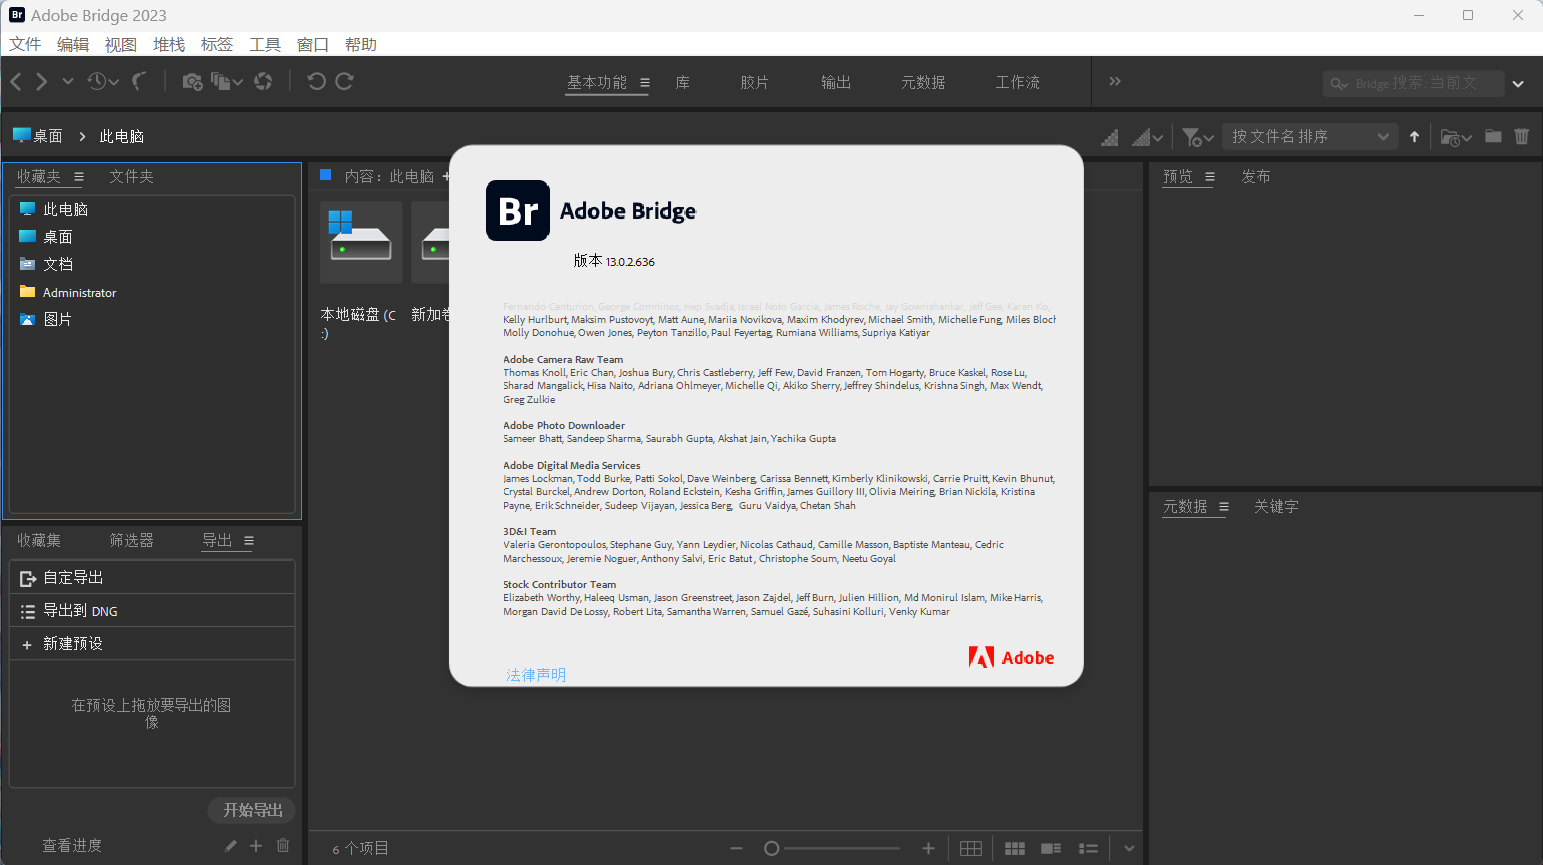 download the last version for android Adobe Bridge 2023 v13.0.4.755